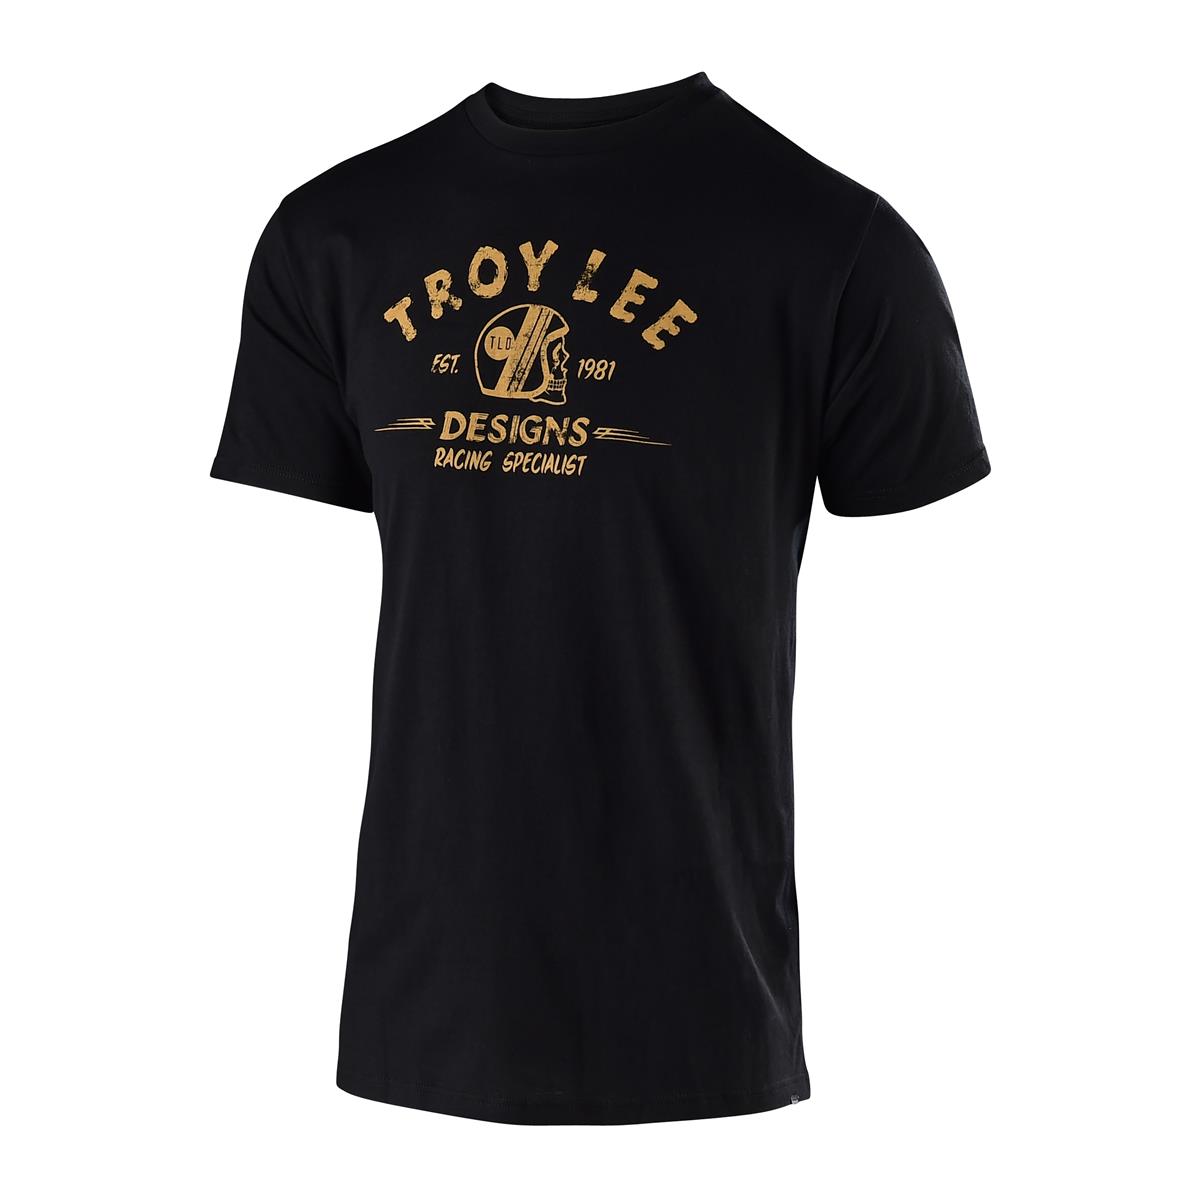 Troy Lee Designs T-Shirt Racing Specialist Black